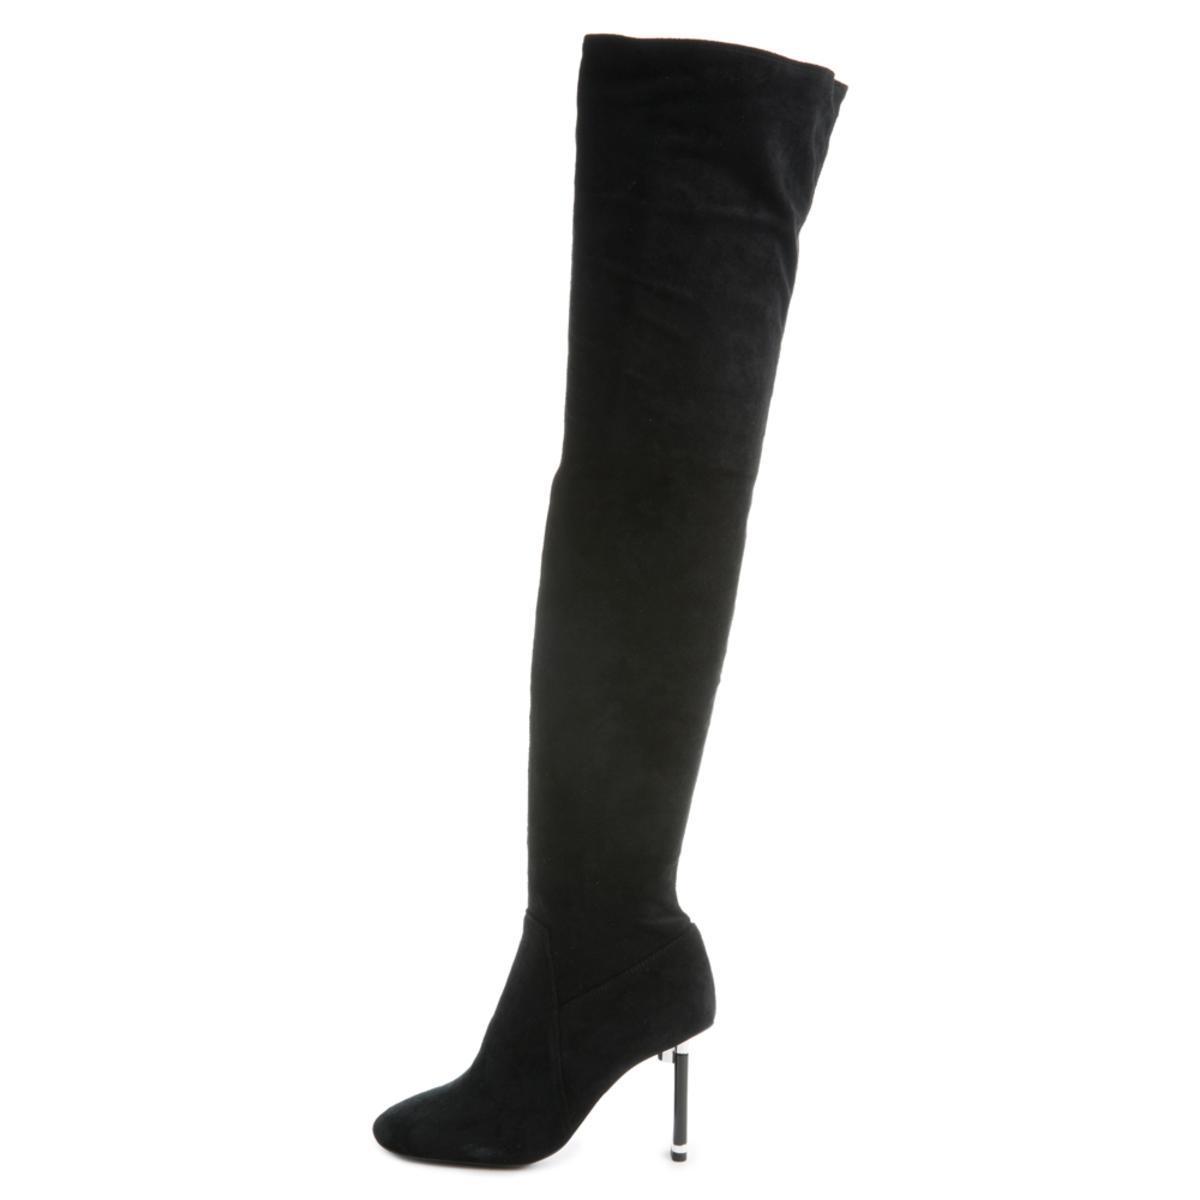 black suede thigh high heel boots